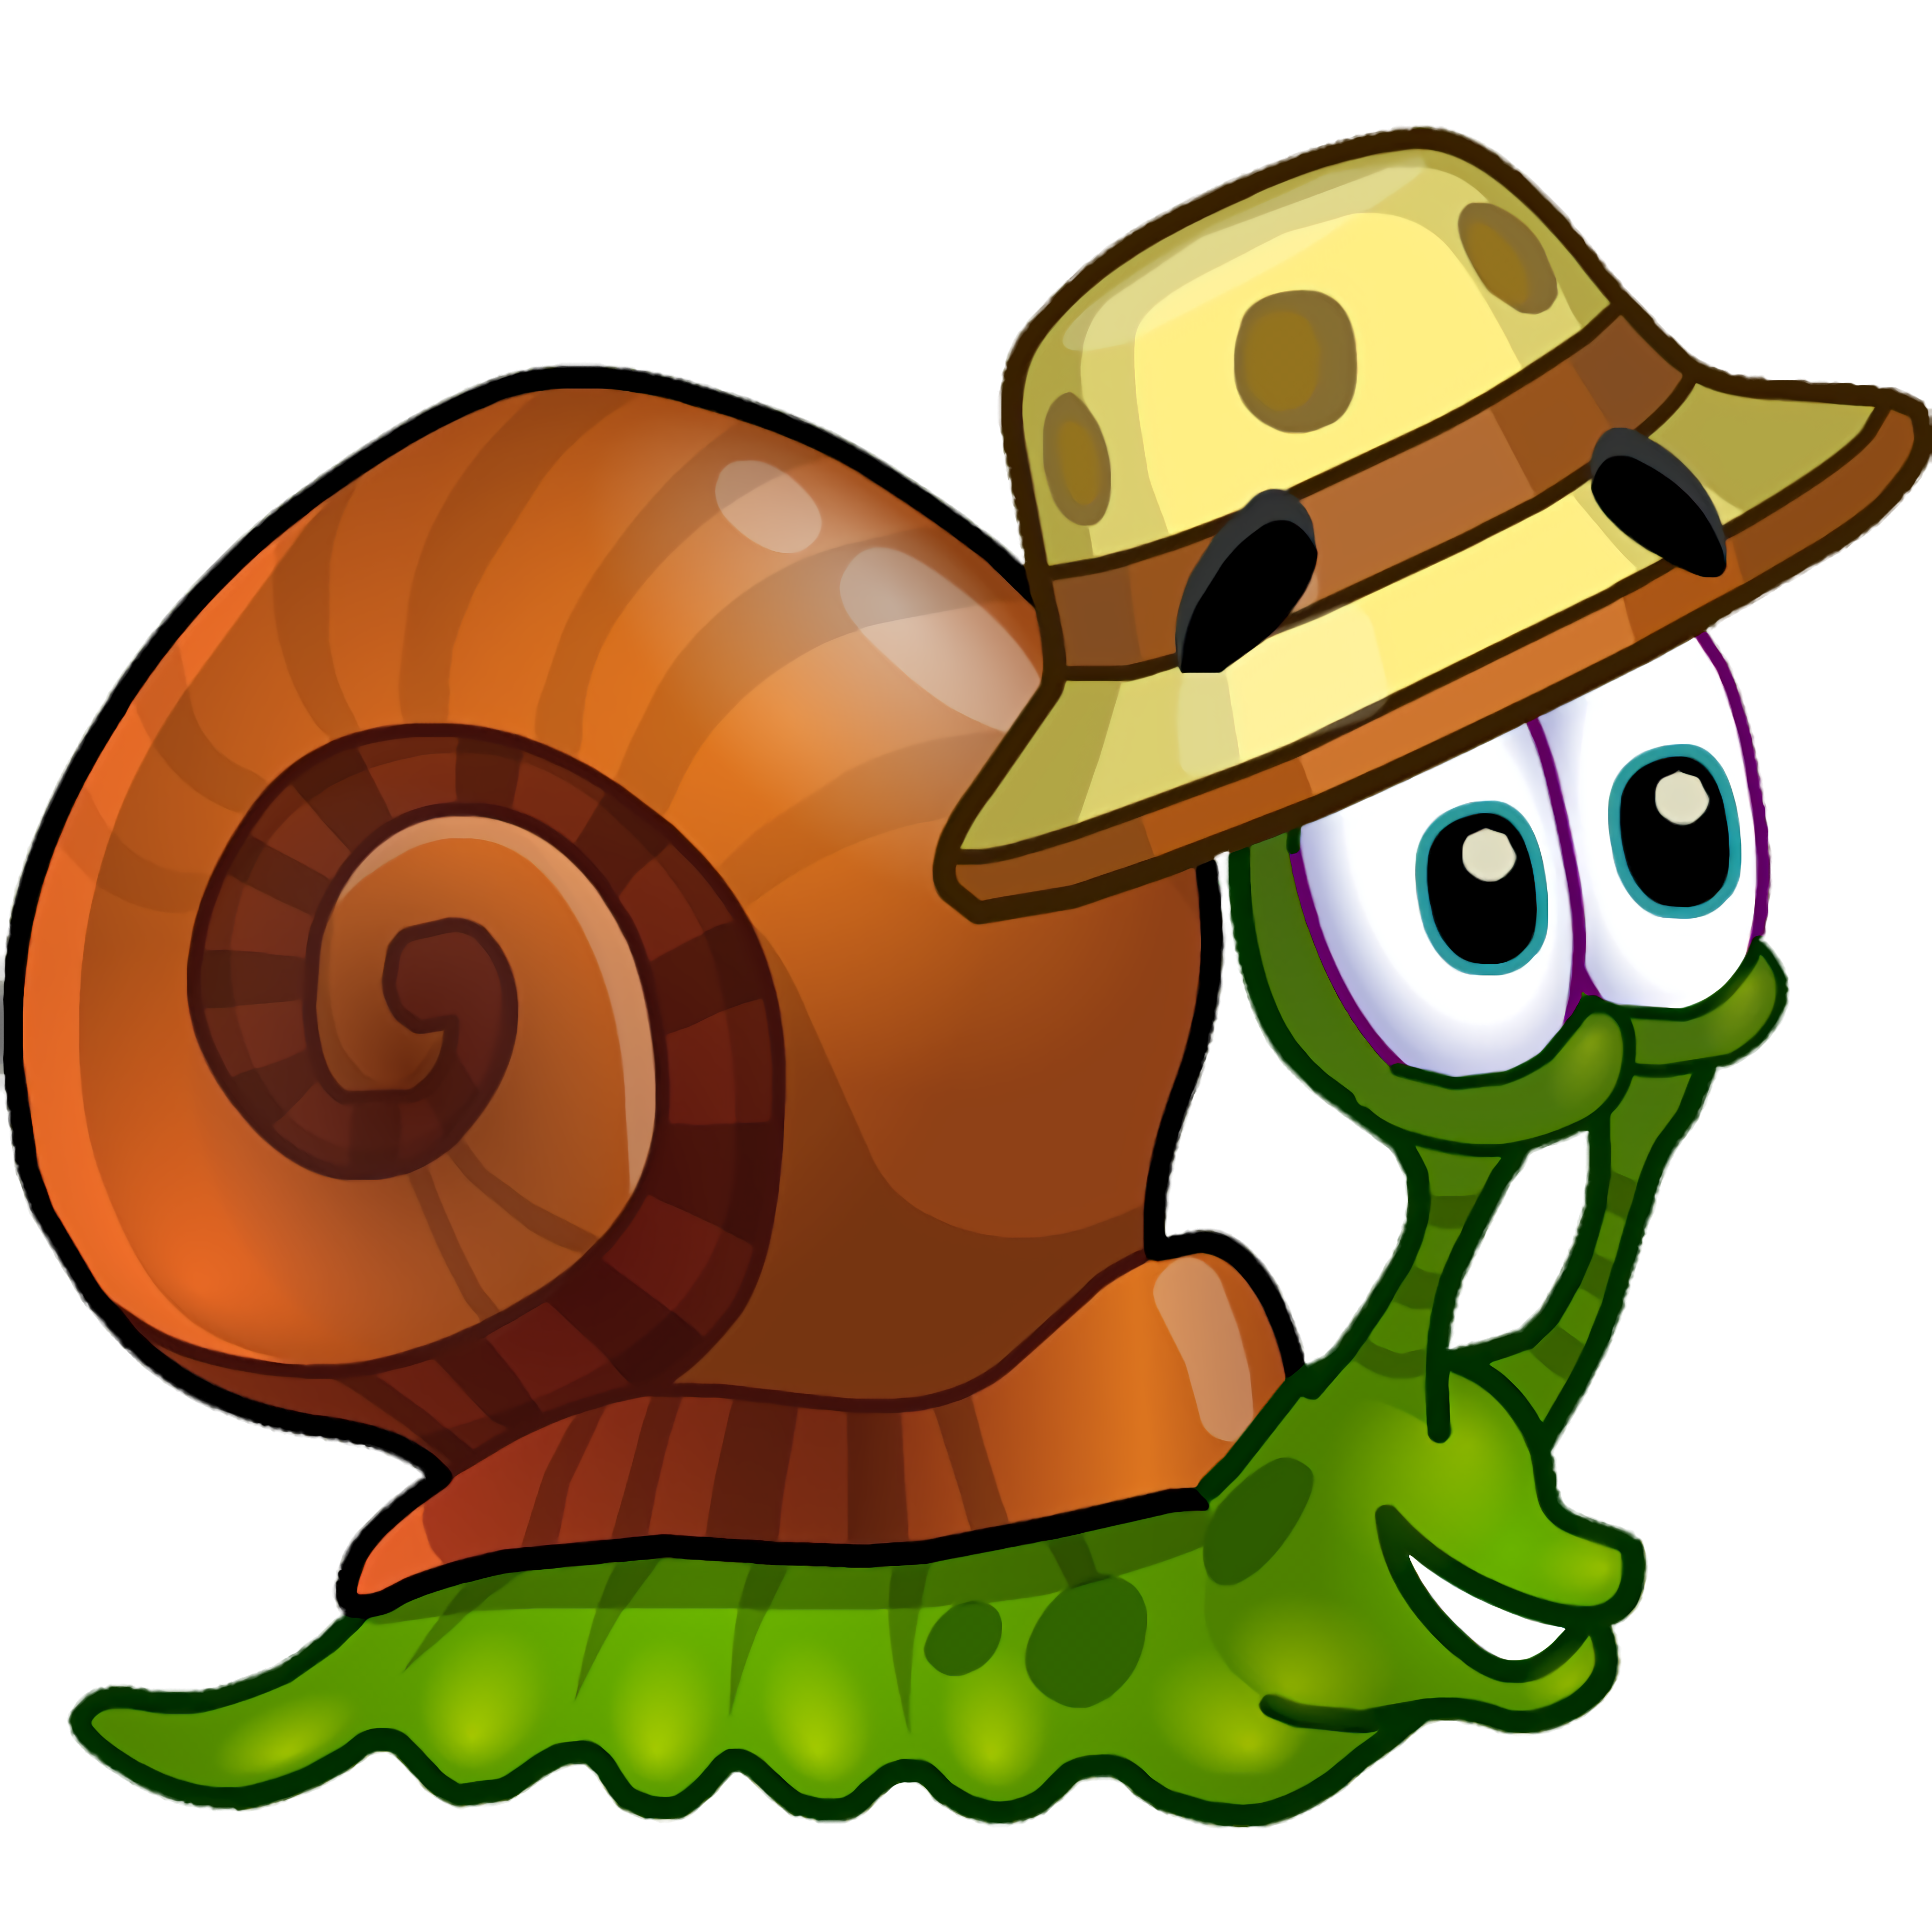 Улитка Боб 3 (Snail Bob 3). Снаил Боб. Snail Bob 2 (улитка Боб 2). Snail Bob (улитка Боб) 6.